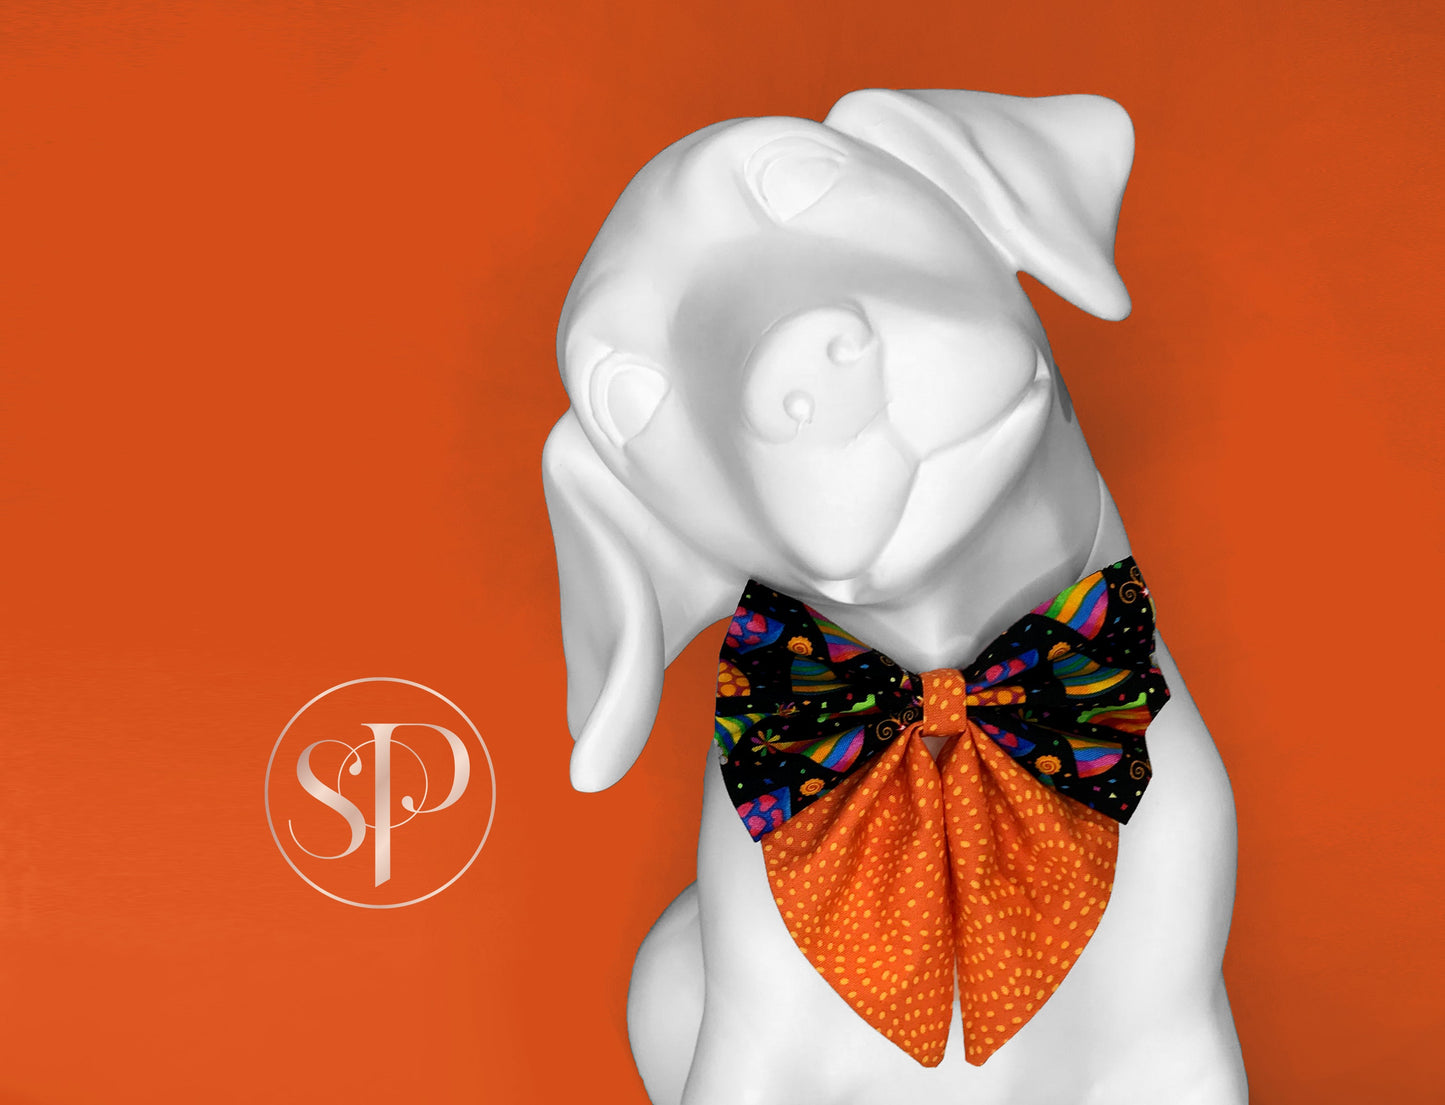 Marmalade Pippin Party Hats Dog Sailor Bow